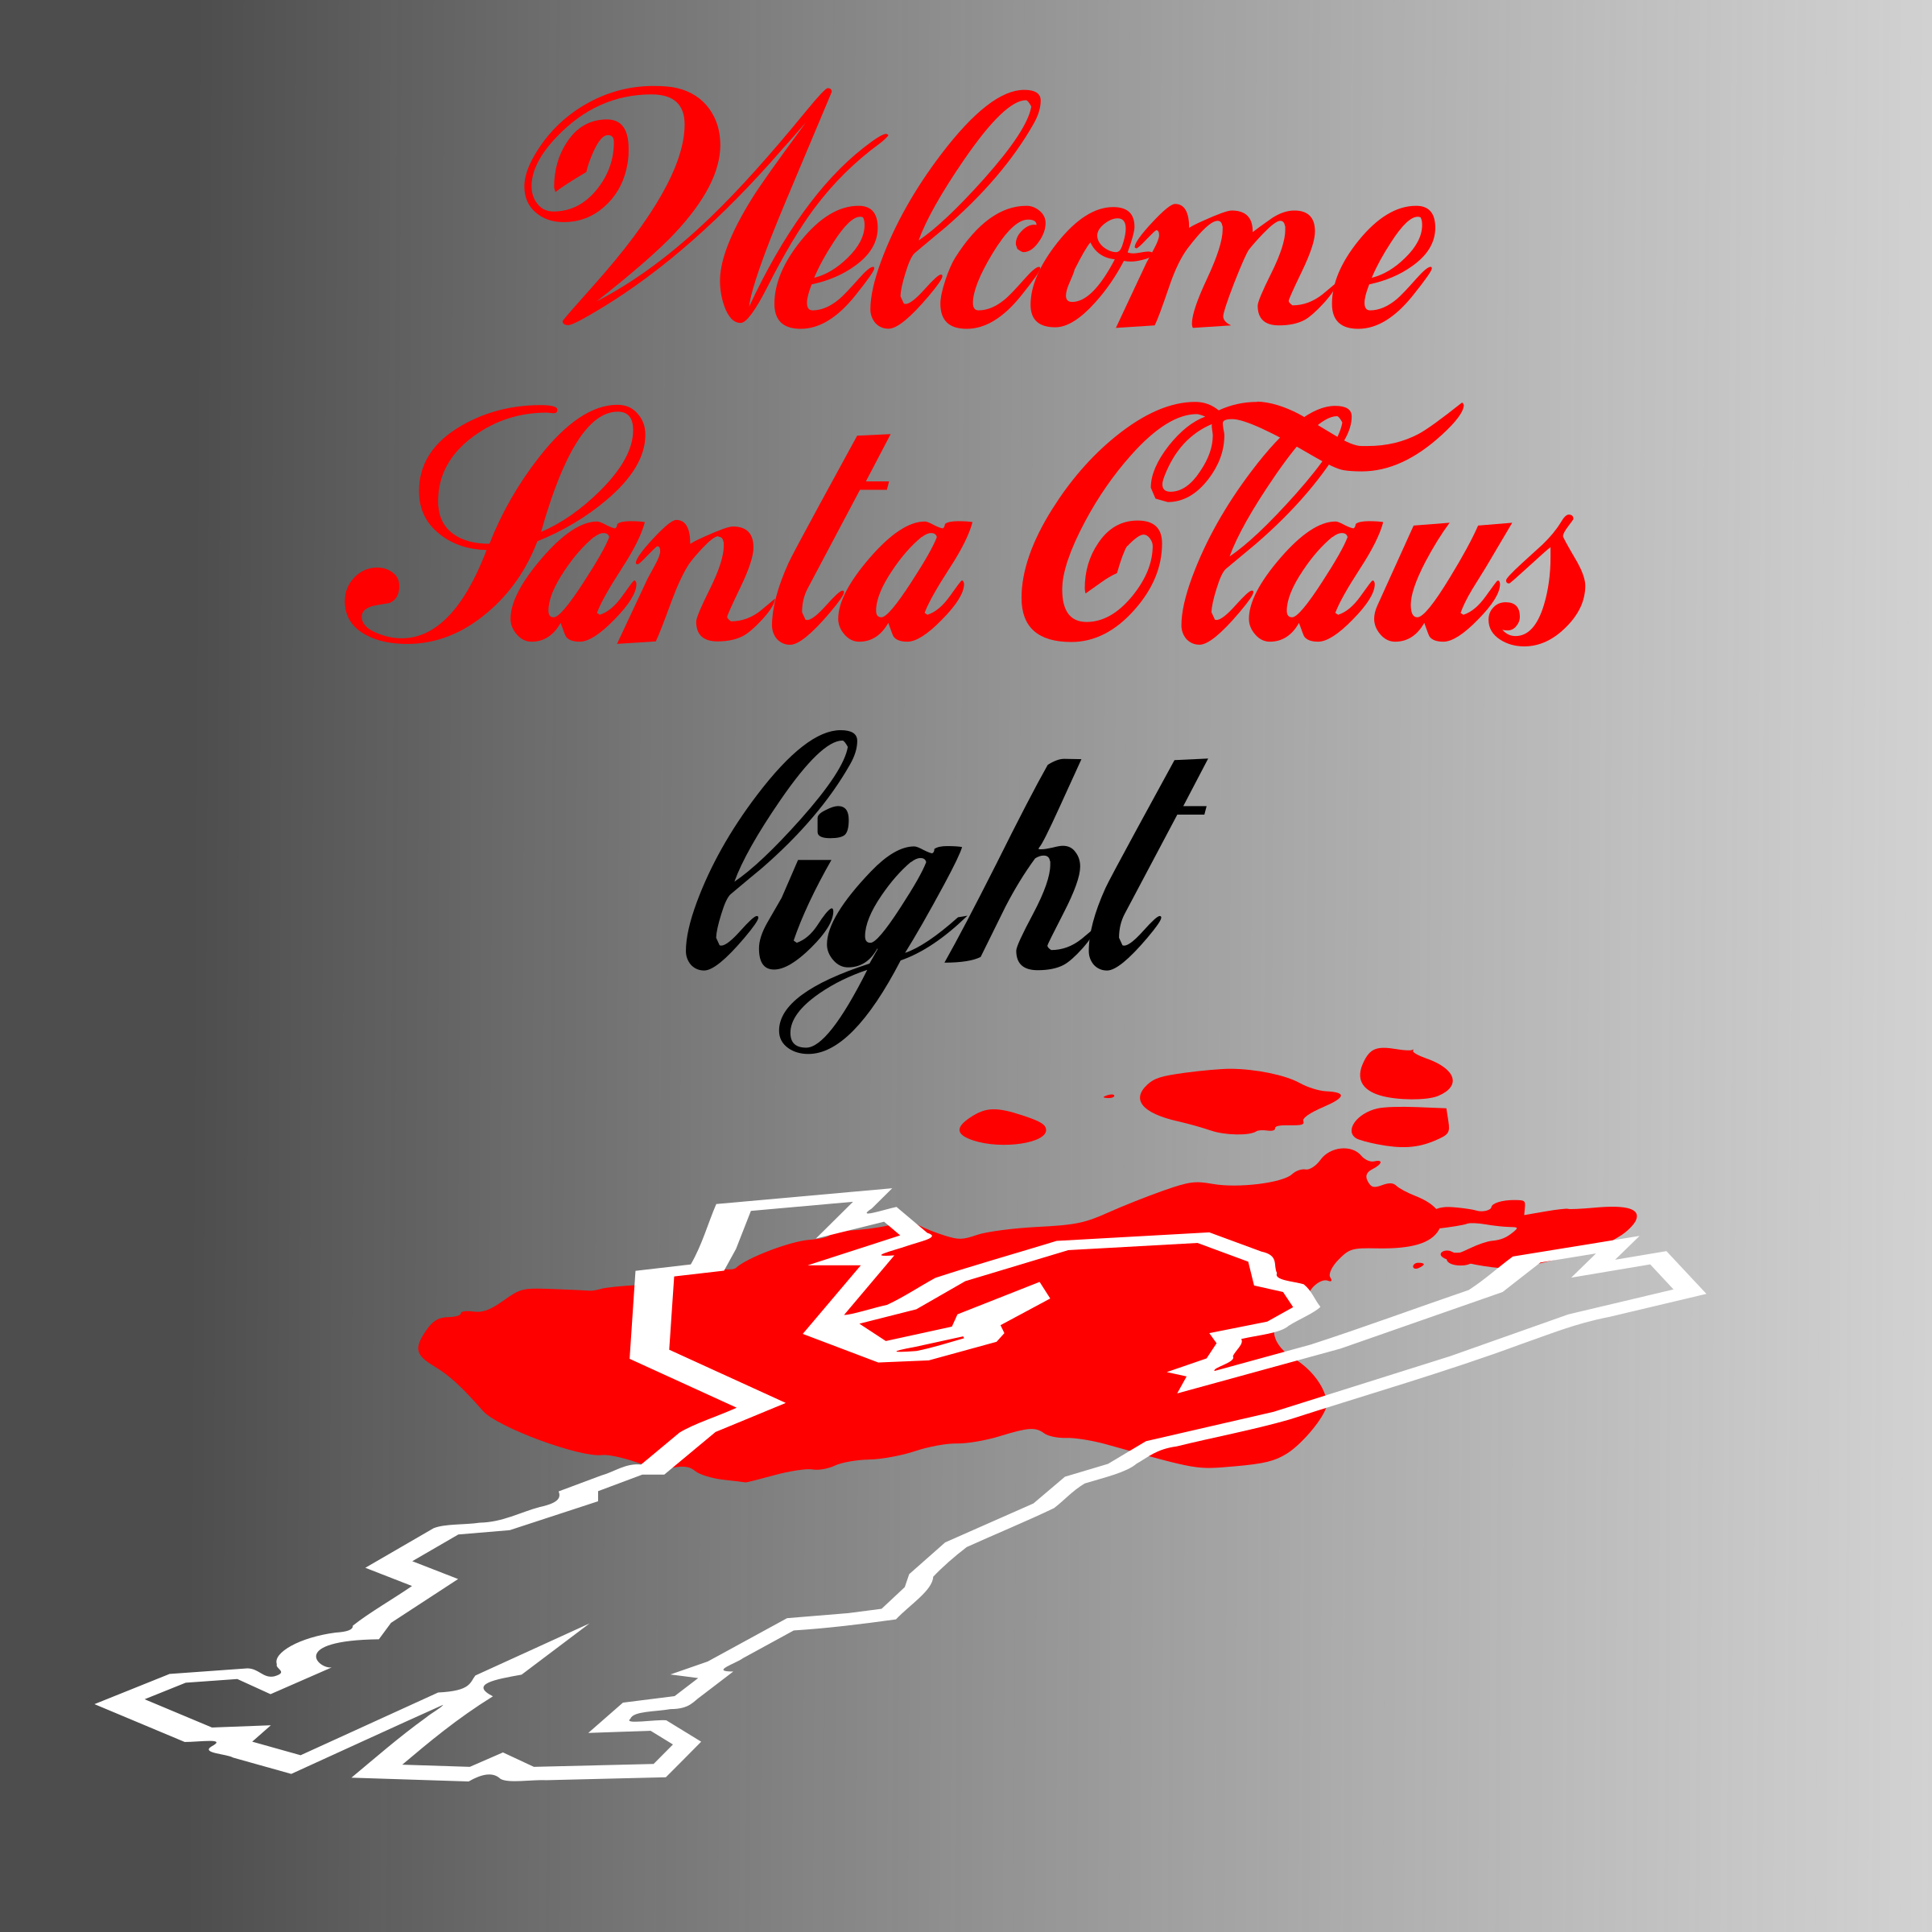 Welcome Santa Claus Light Clip arts